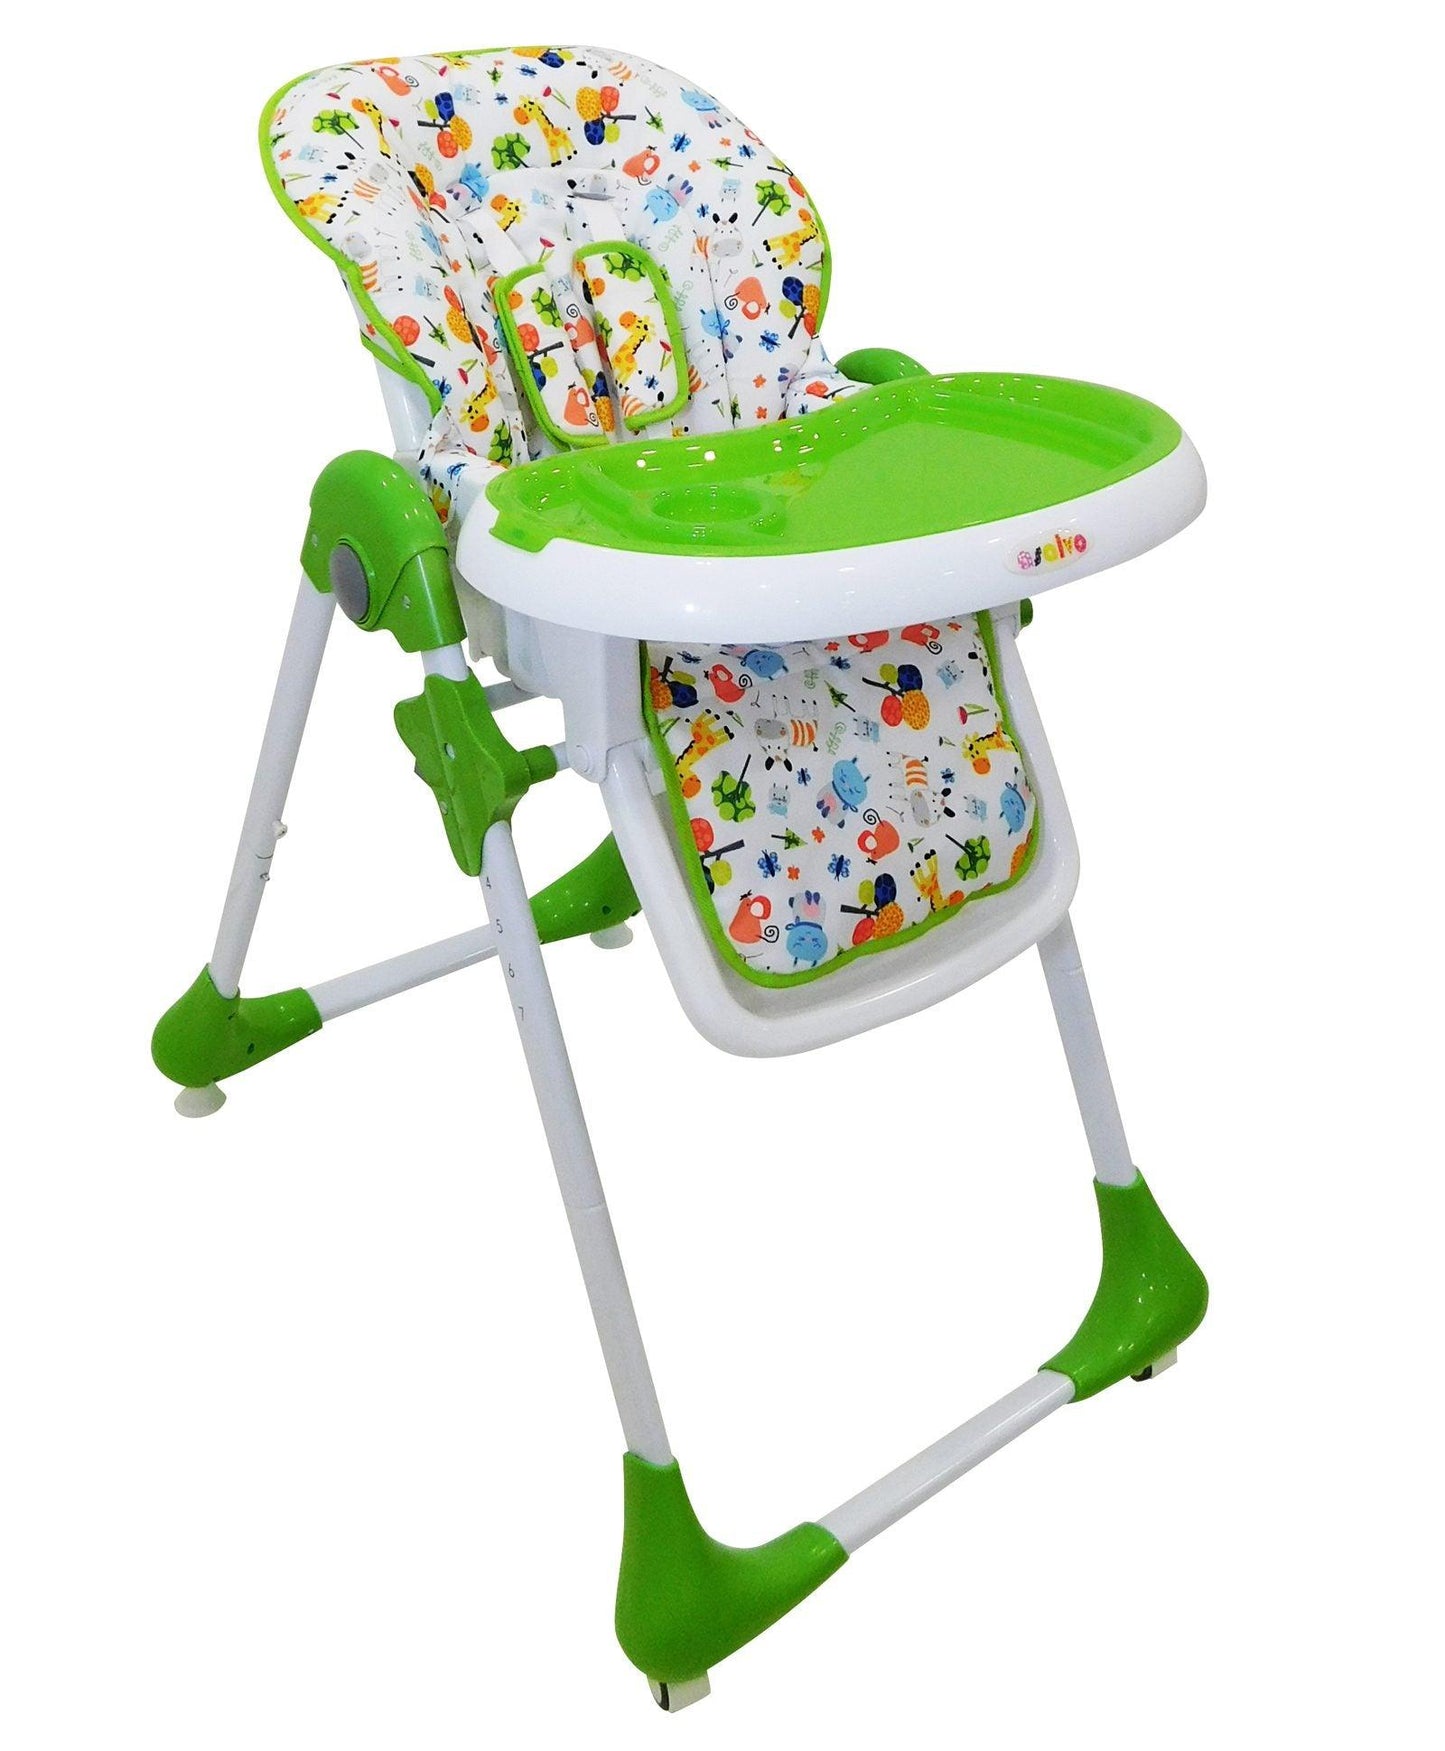 PATOYS | Asalvo 14900 High Chair with Wheels Jungle Print - Green High Chairs Asalvo